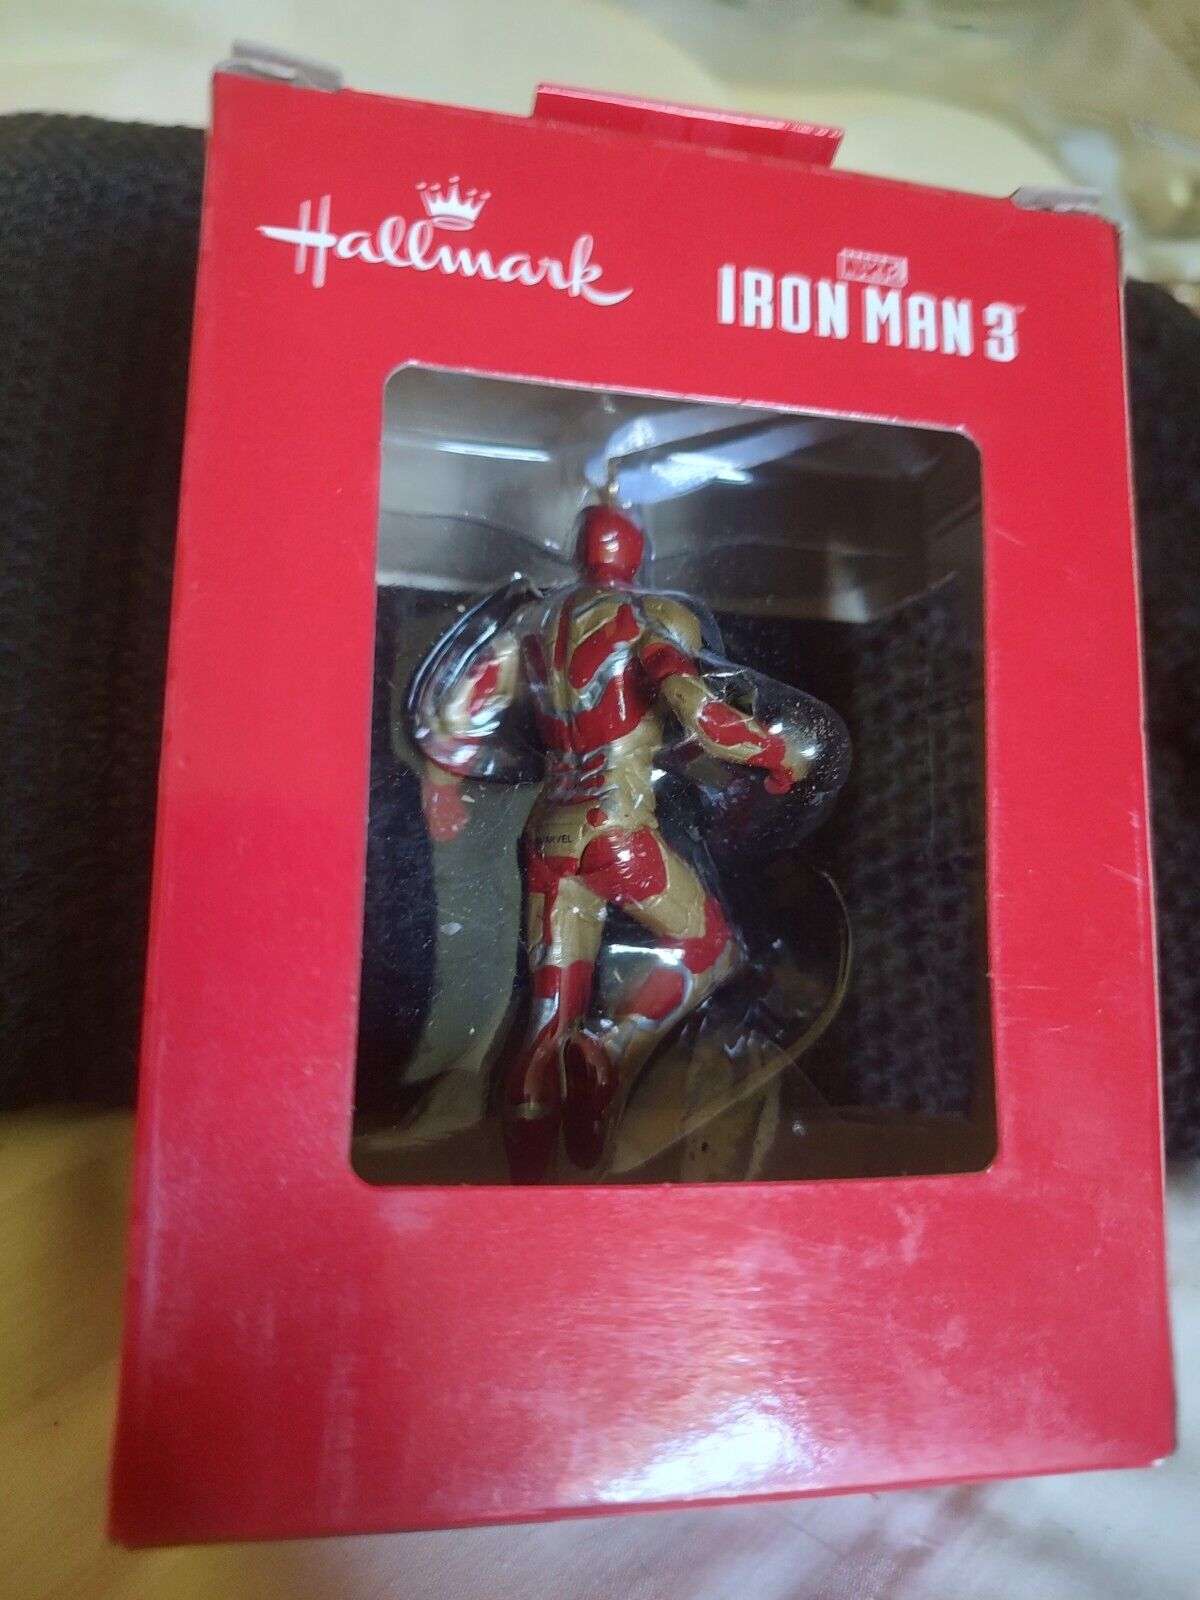 Hallmark Iron Man 3 Christmas Ornament Red Box Avengers